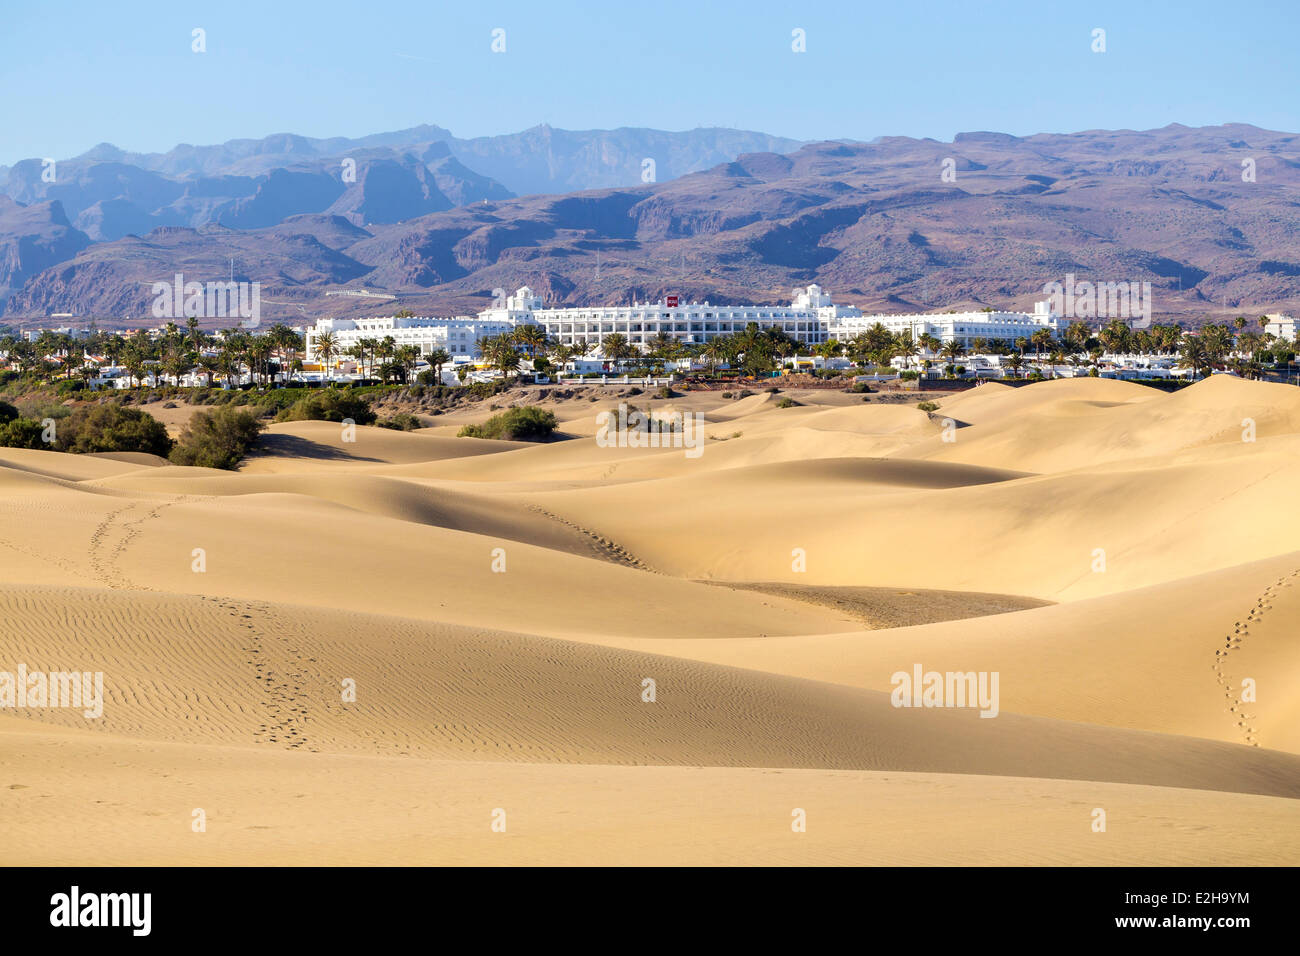 RIU hotel on the beach with dunes at Maspalomas, Dunas de Maspalomas, Gran Canaria, Canary Islands, Spain Stock Photo